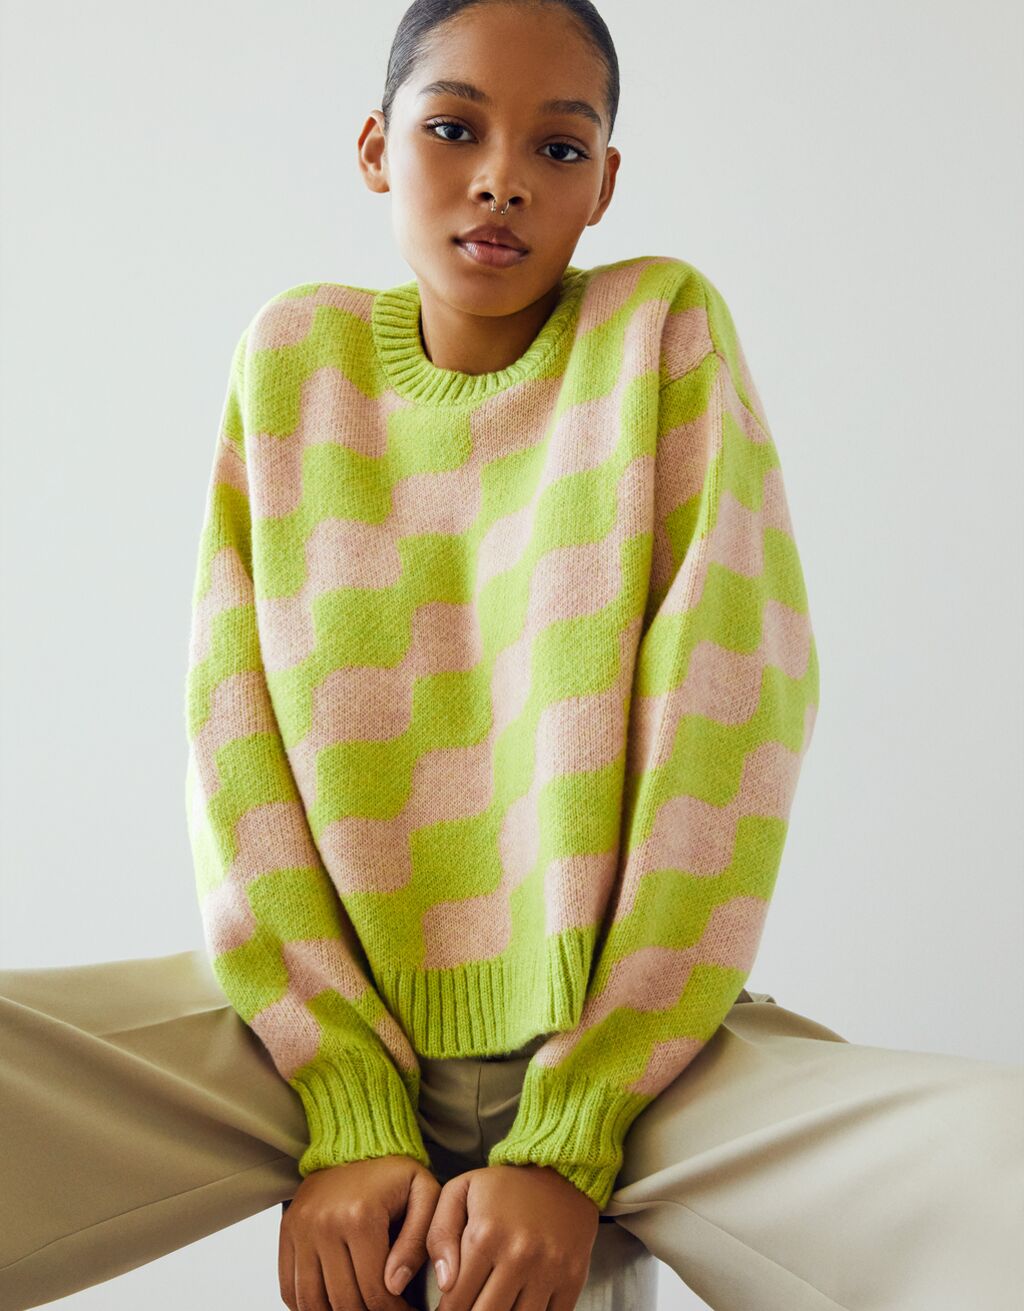 Chequered print sweater